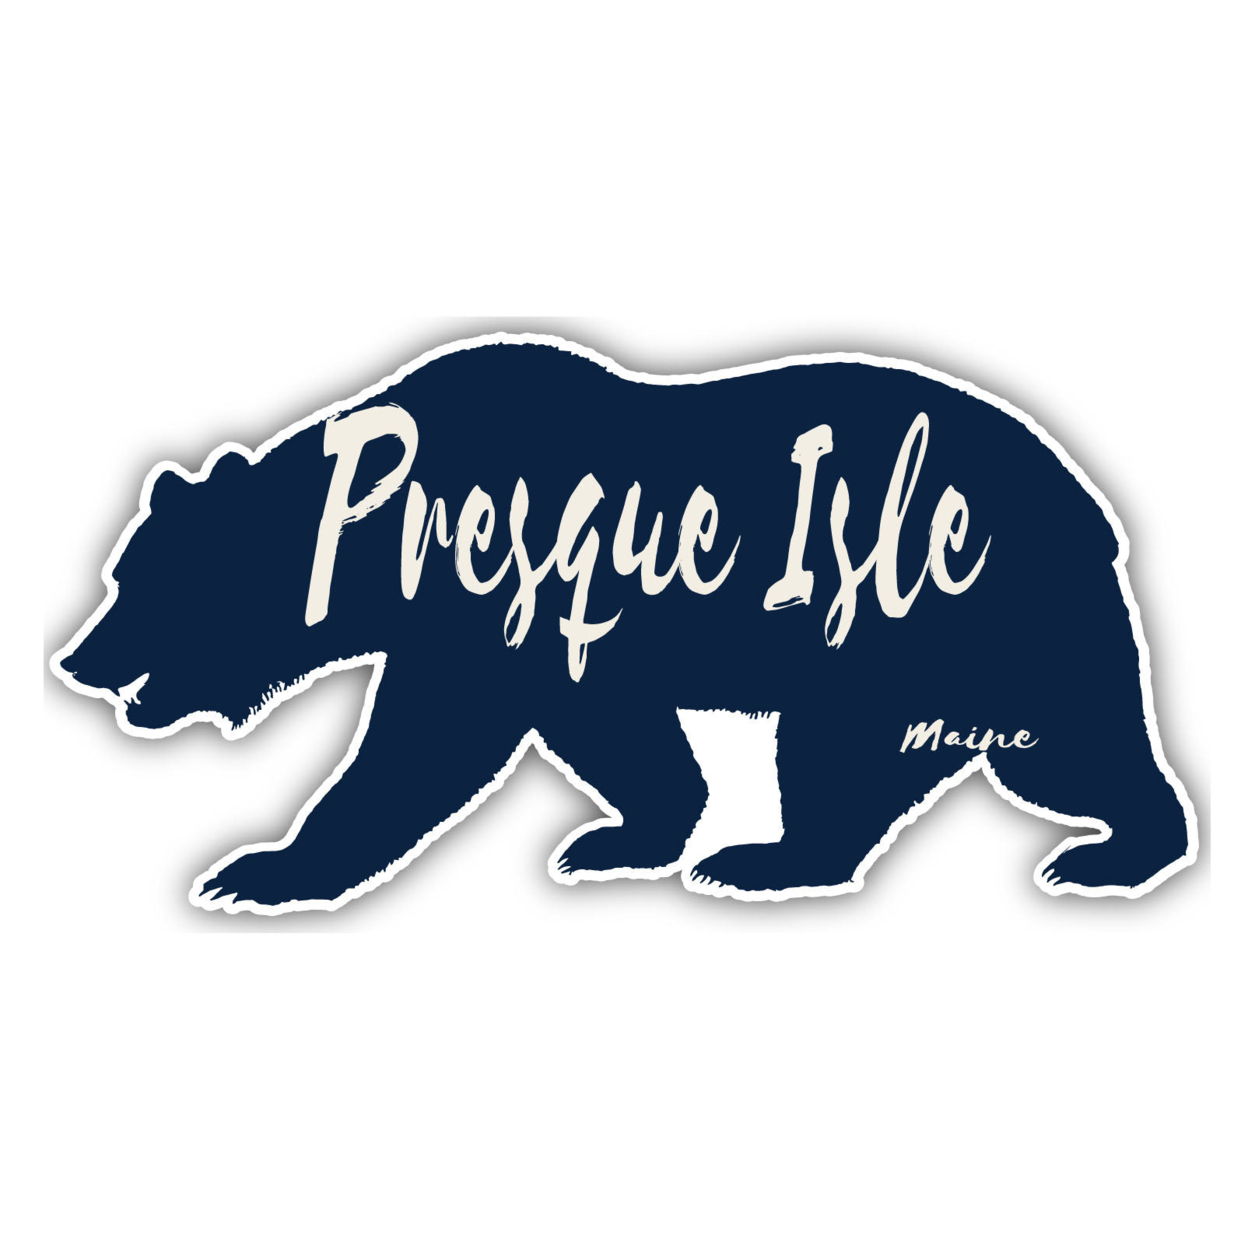 Presque Isle Maine Souvenir Decorative Stickers (Choose Theme And Size) - Single Unit, 2-Inch, Tent